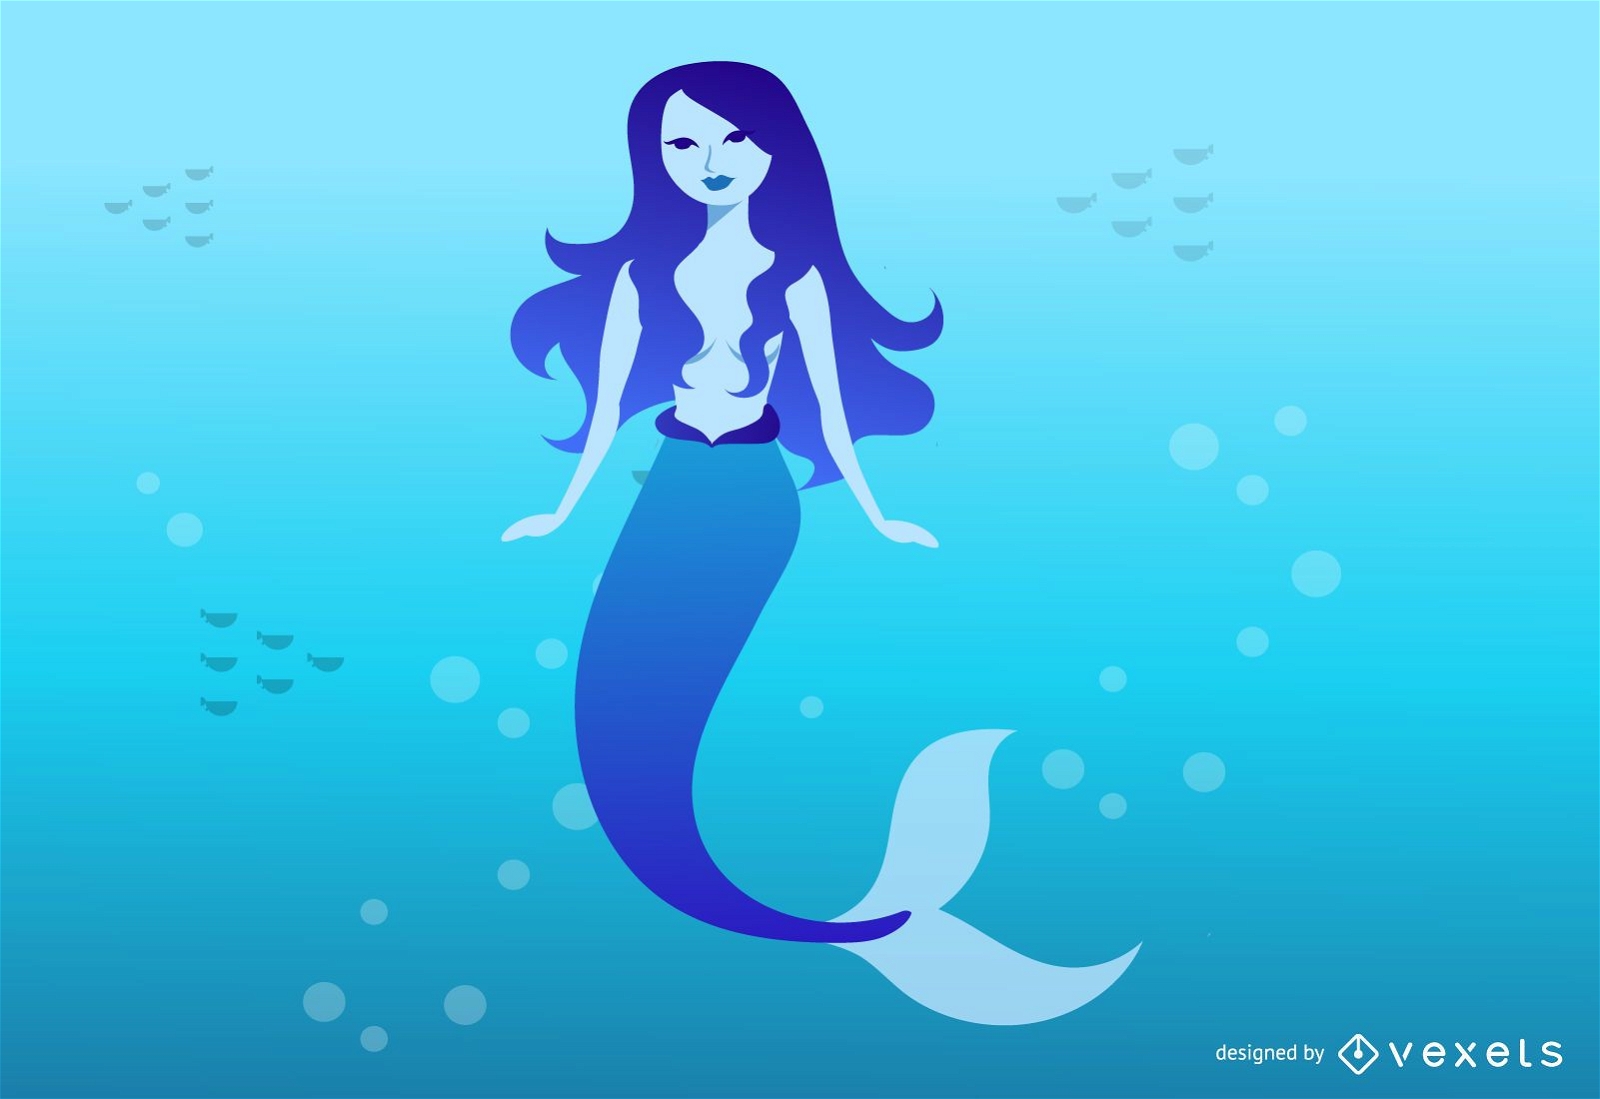 Mermaid Vector & Graphics to Download